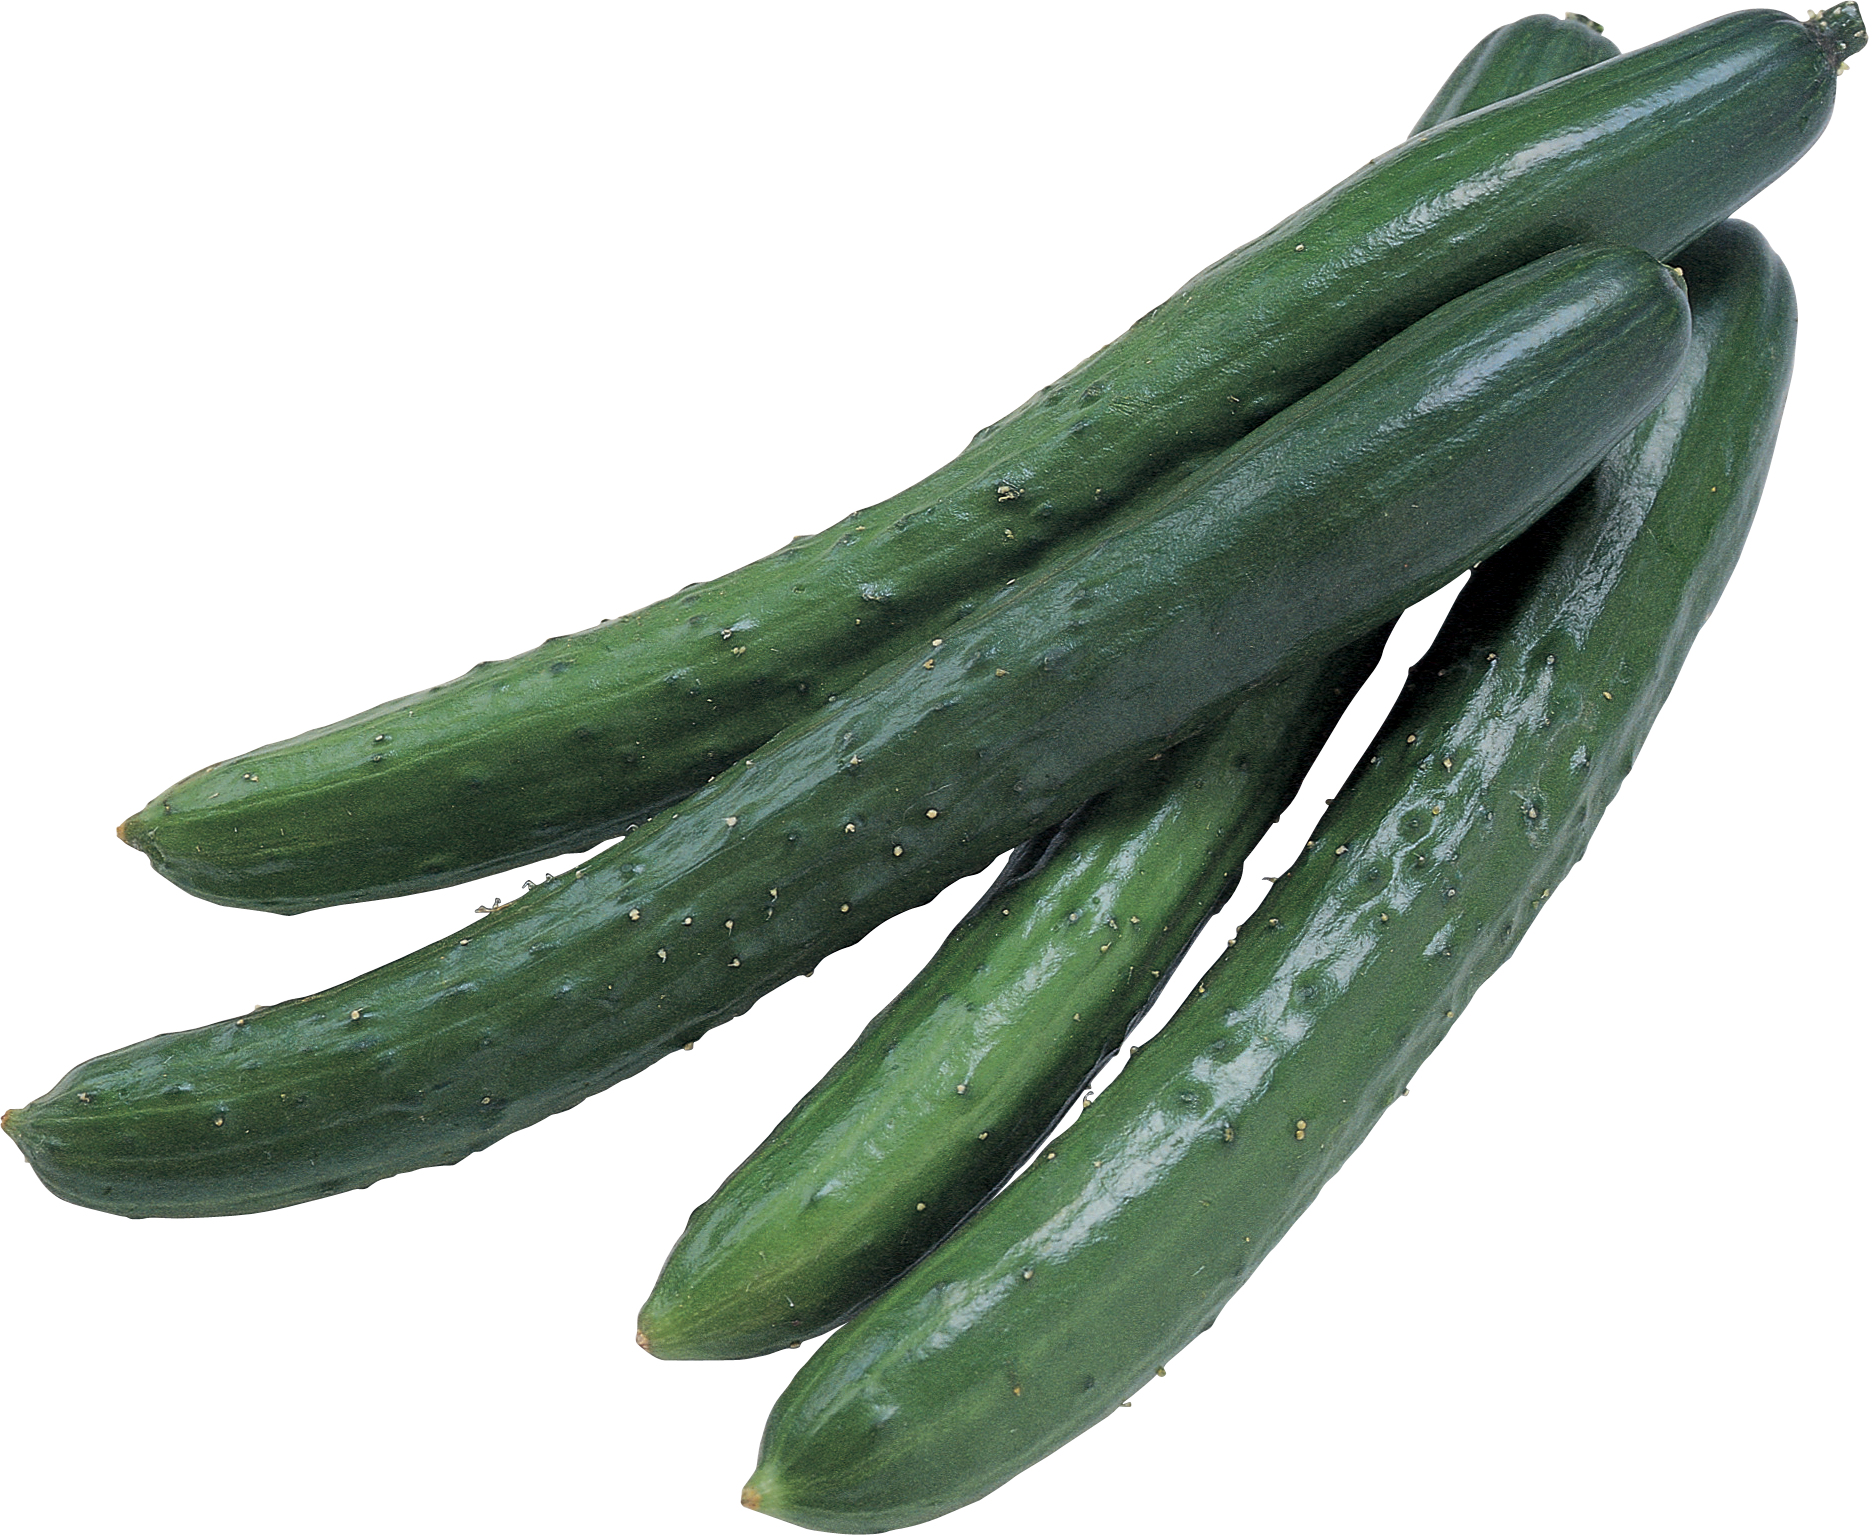 Four long cucumbers PNG